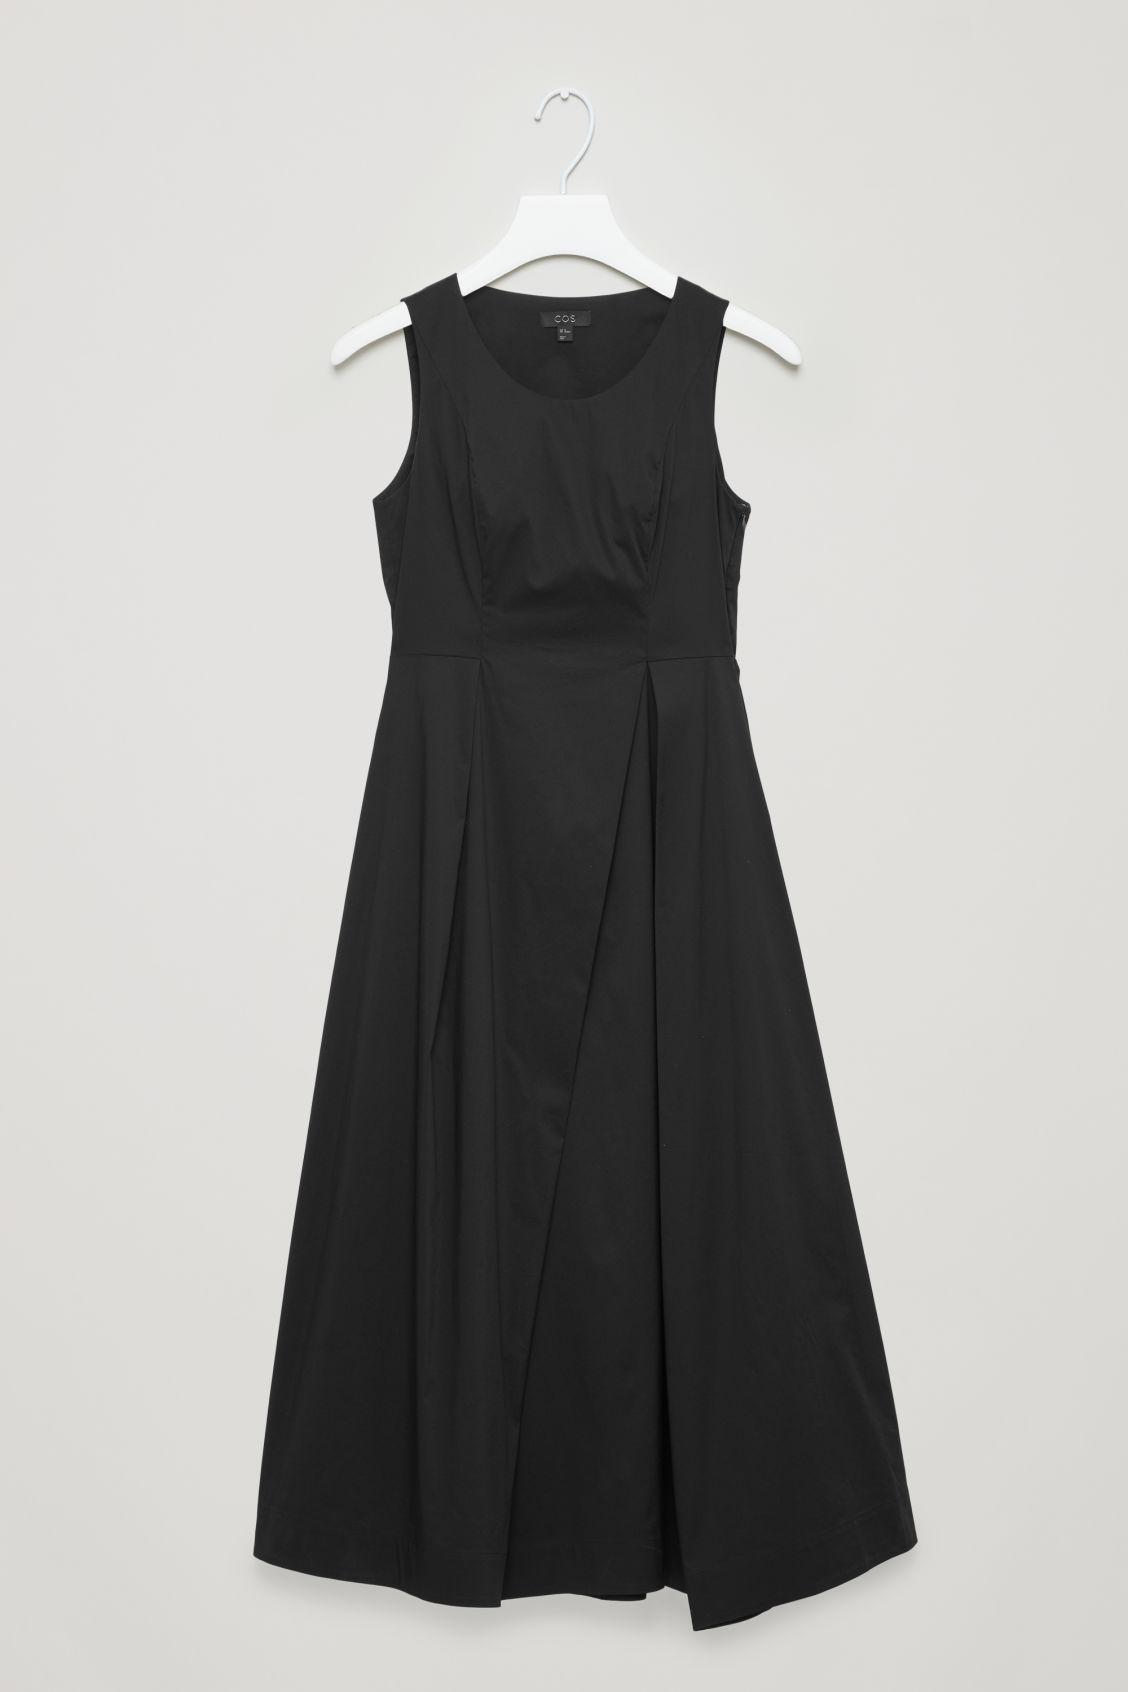 cos black dress